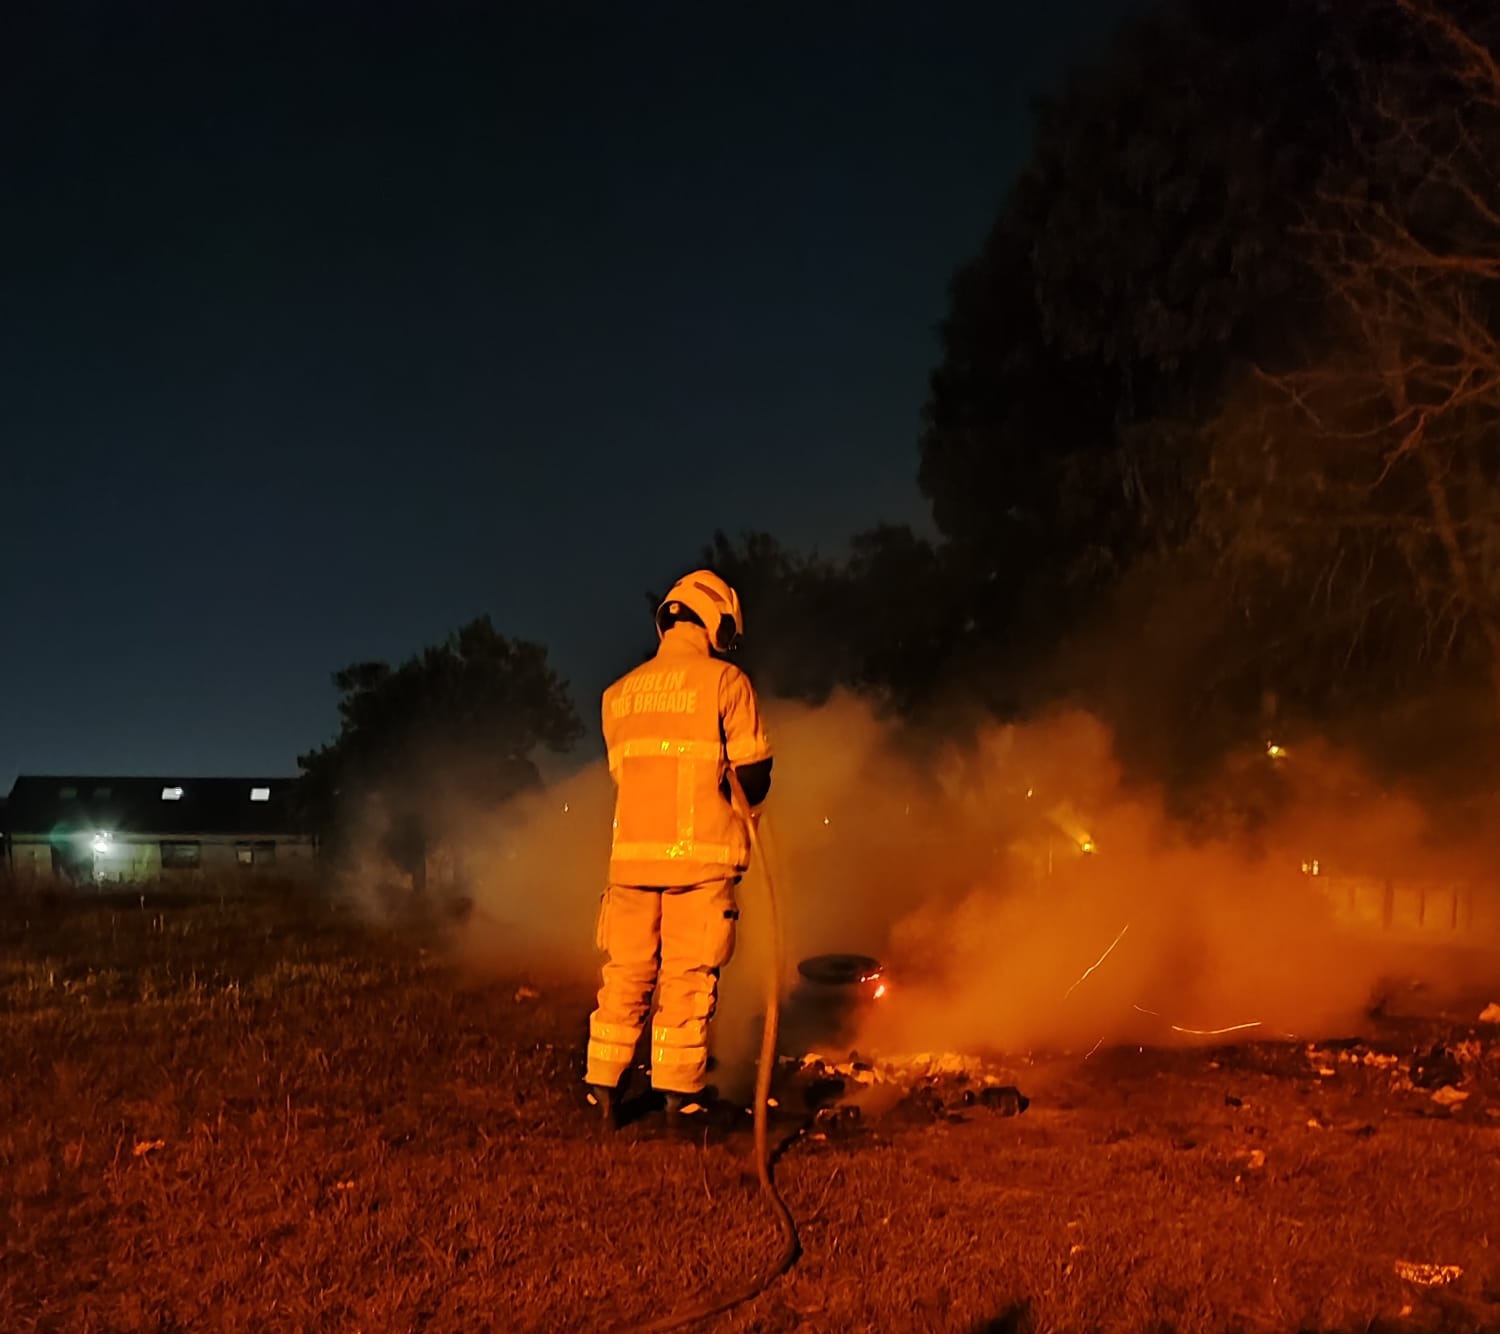 A firefighter extinguishing a fire near Portmarnock in Dublin on Halloween night